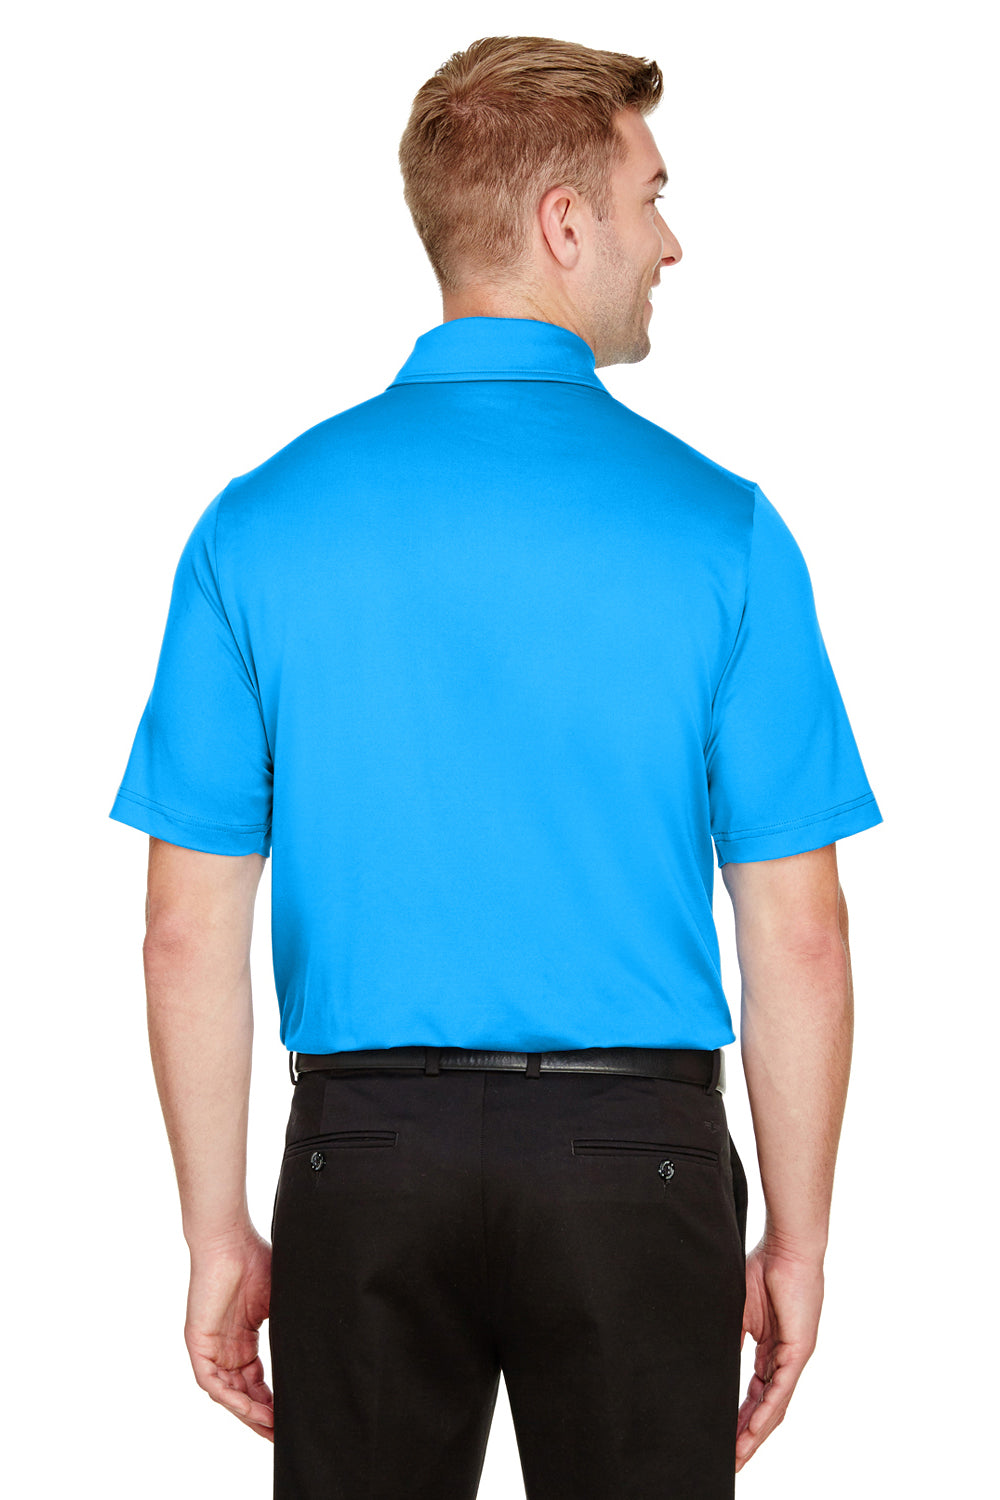 Devon & Jones DG21 Mens CrownLux Range Flex Performance Moisture Wicking Short Sleeve Polo Shirt Ocean Blue Back